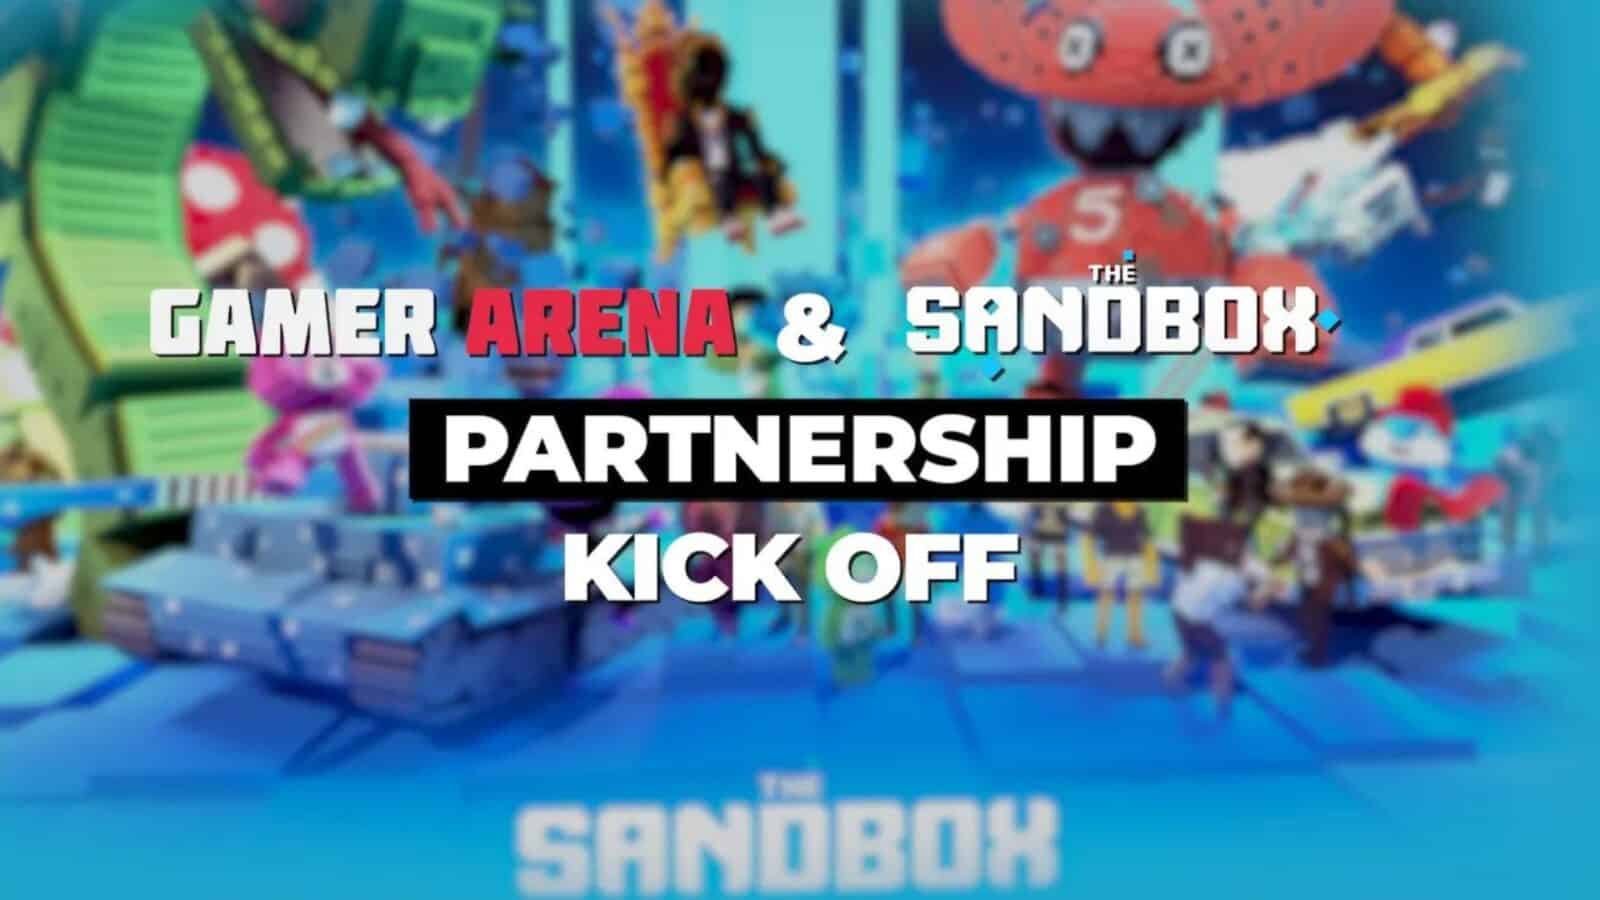 The Sandbox Announces Partnership with Gaming Platform Gamer Arena